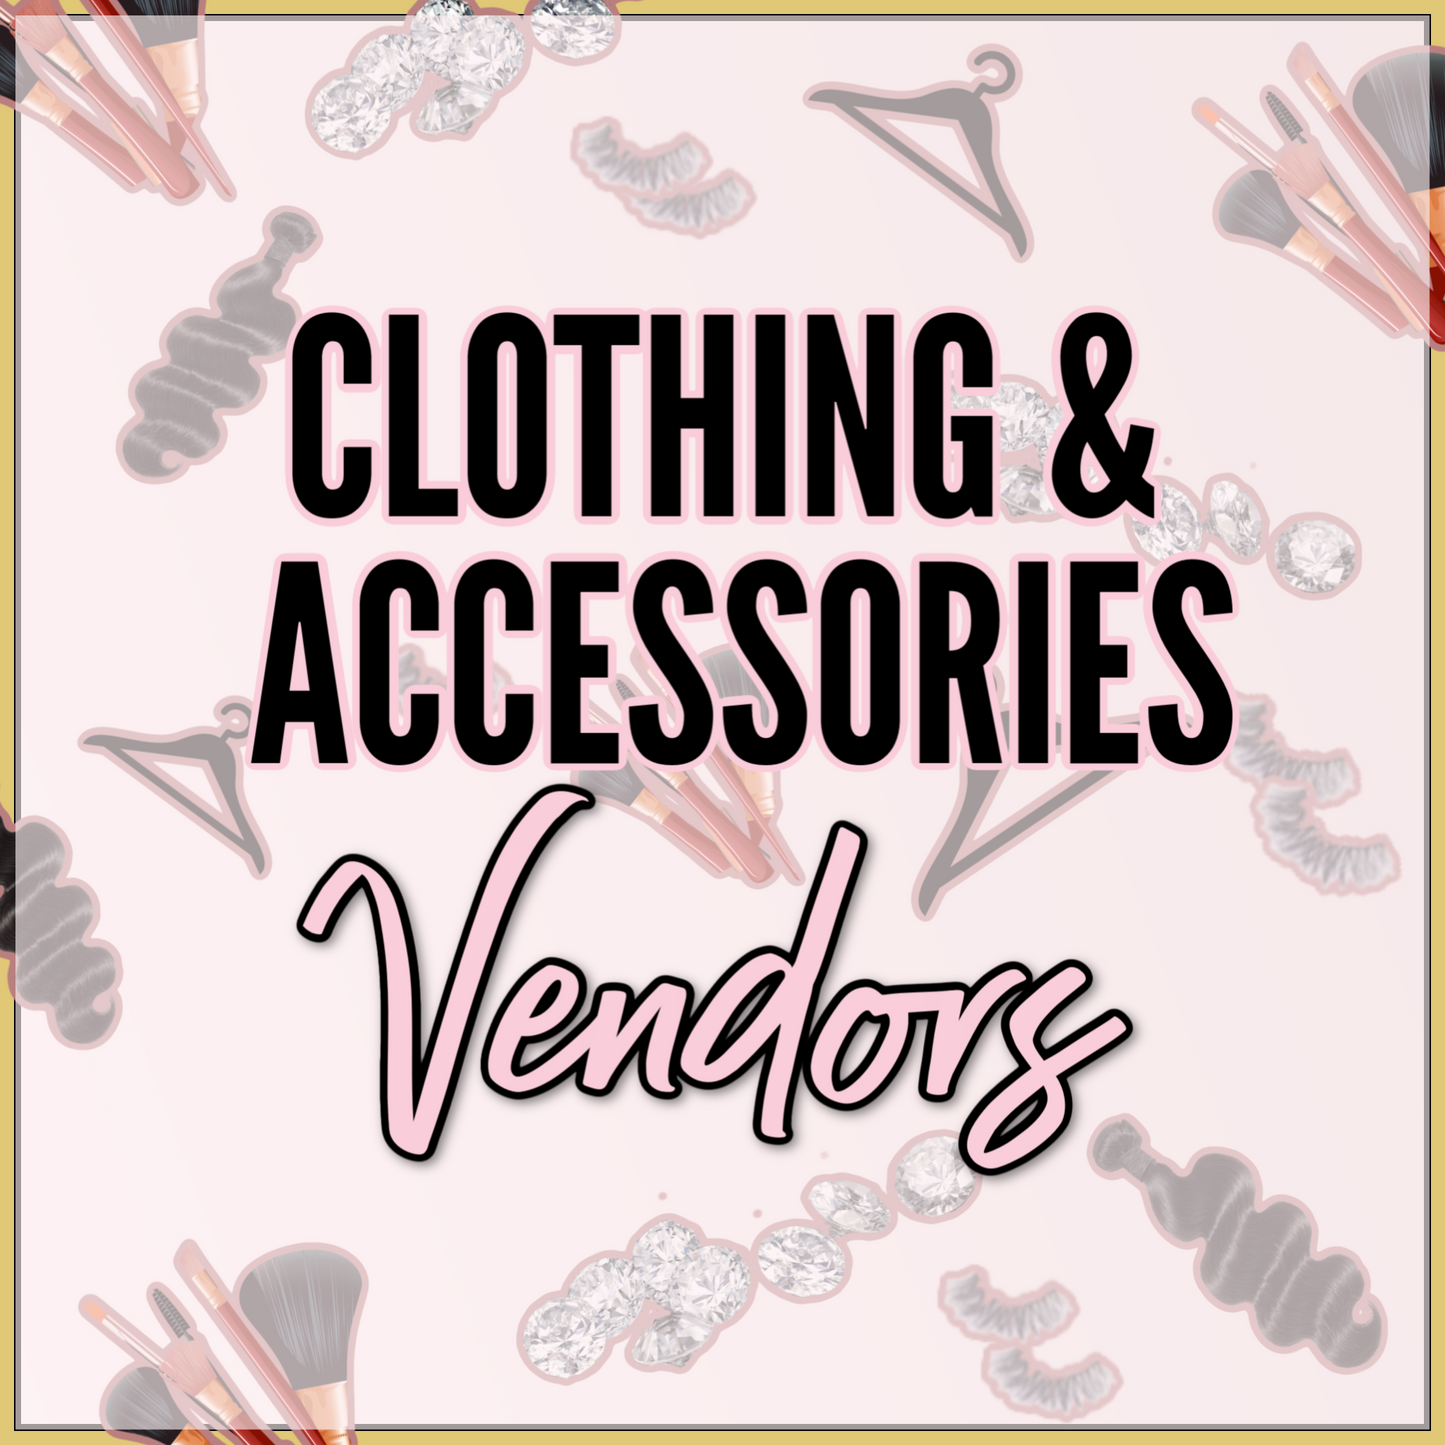 Clothing & Accessories Vendors